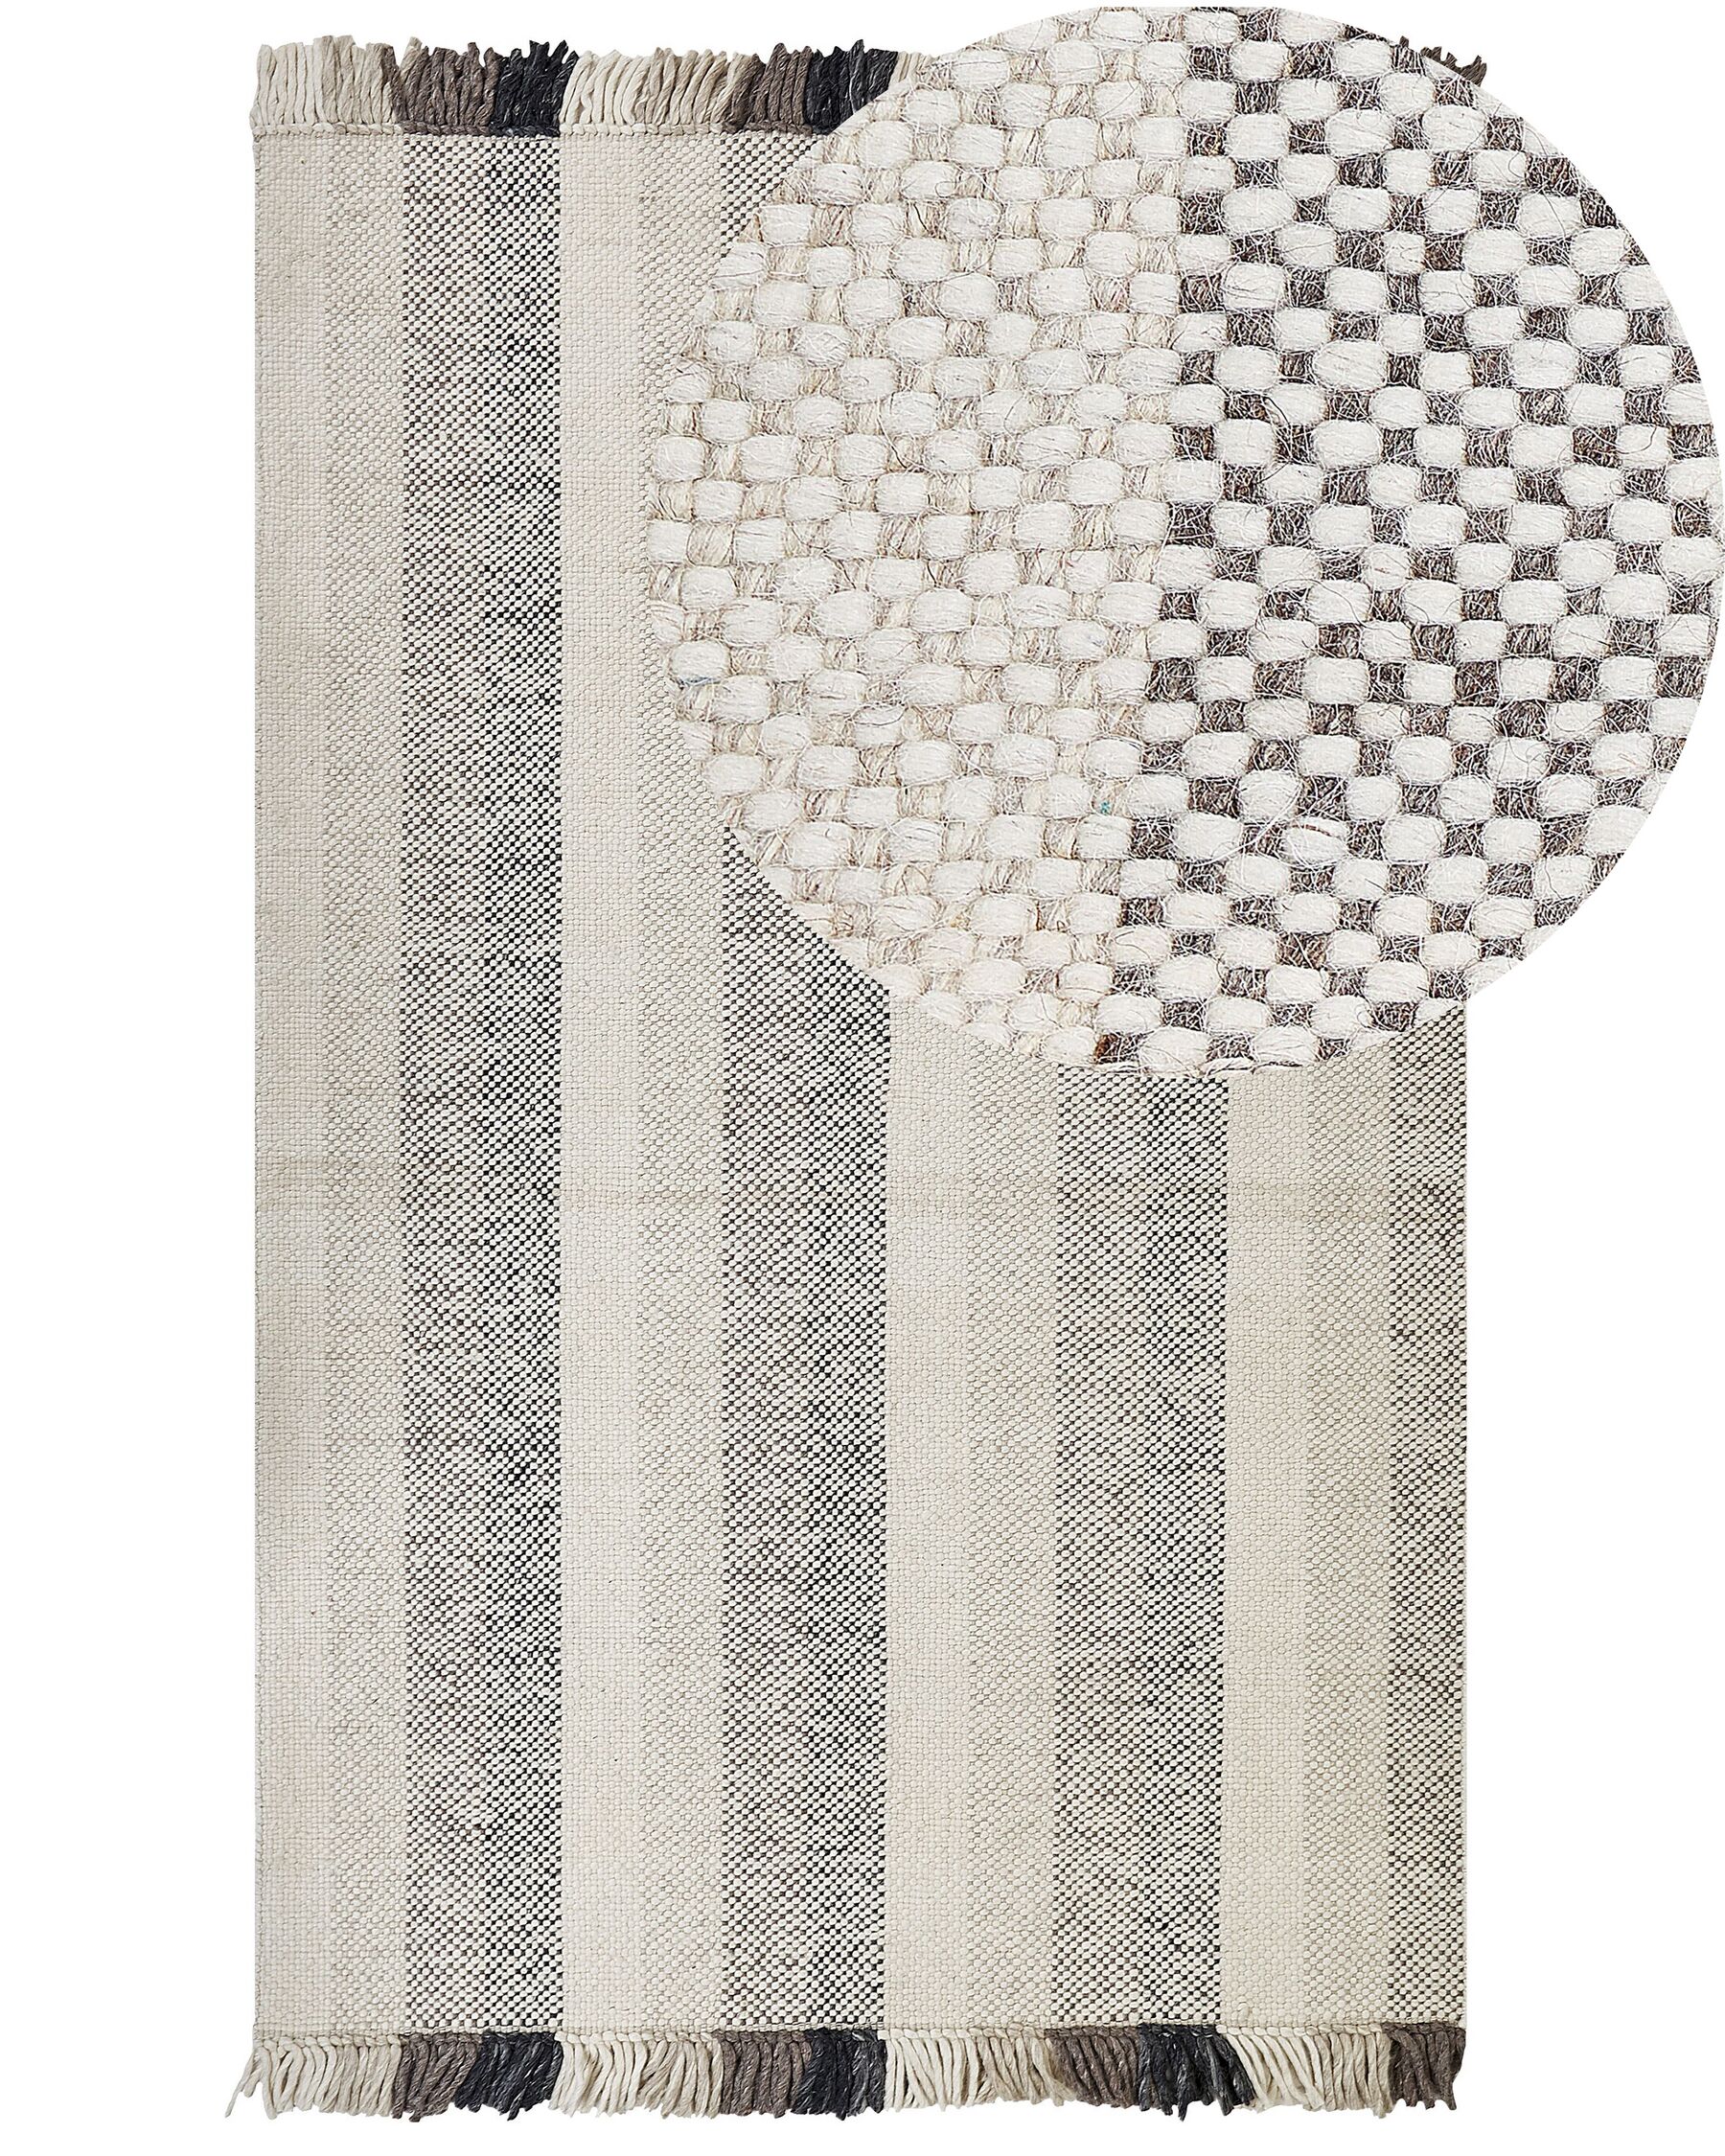 Törtfehér gyapjúszőnyeg 140 x 200 cm EMIRLER_847179